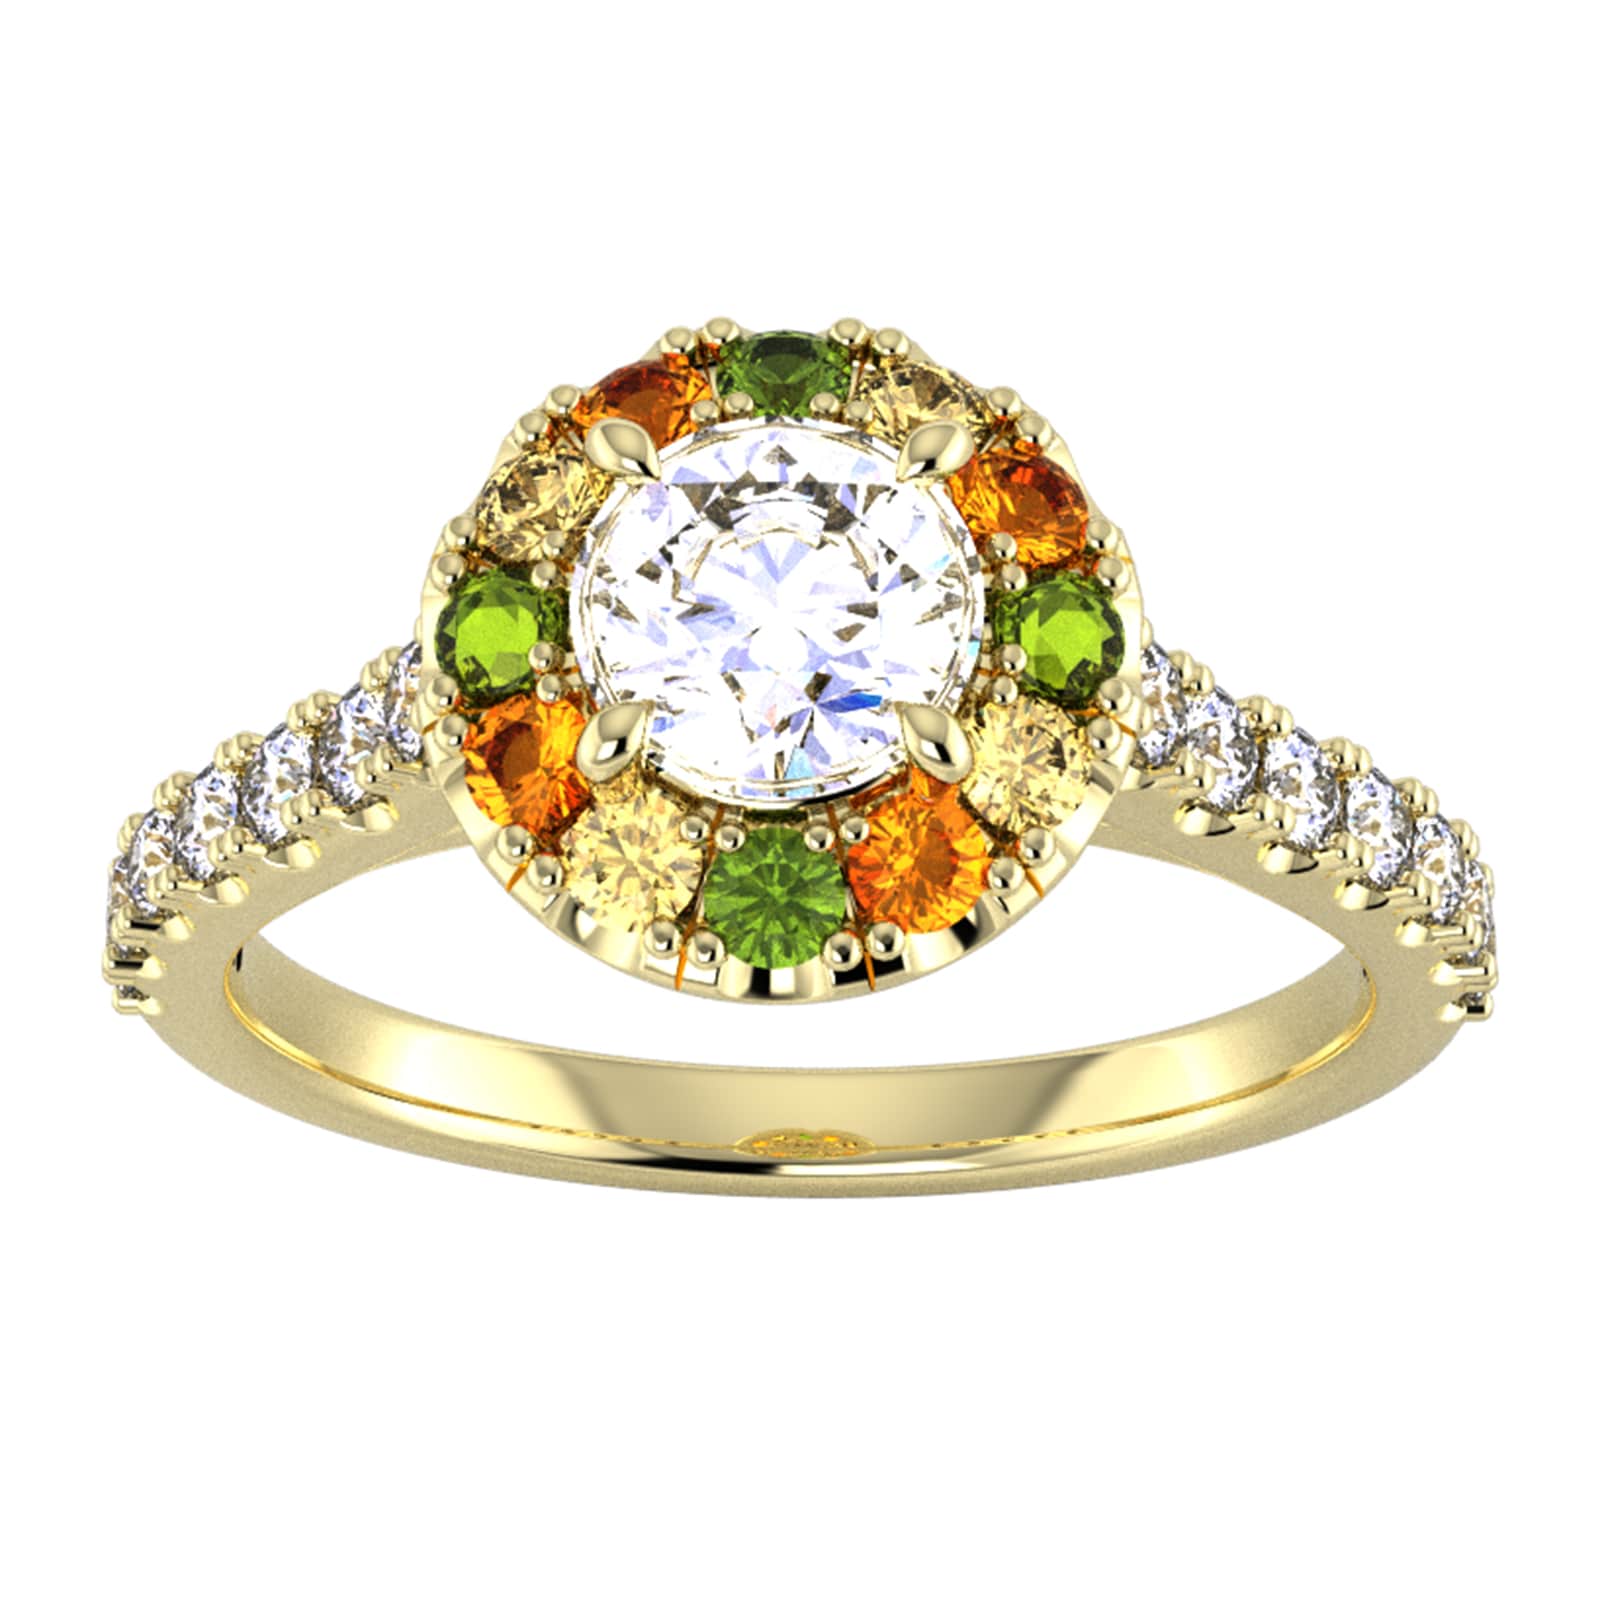 18ct Yellow Gold Diamond & Yellow, Orange, Green Sapphire Halo Ring - Ring Size N.5